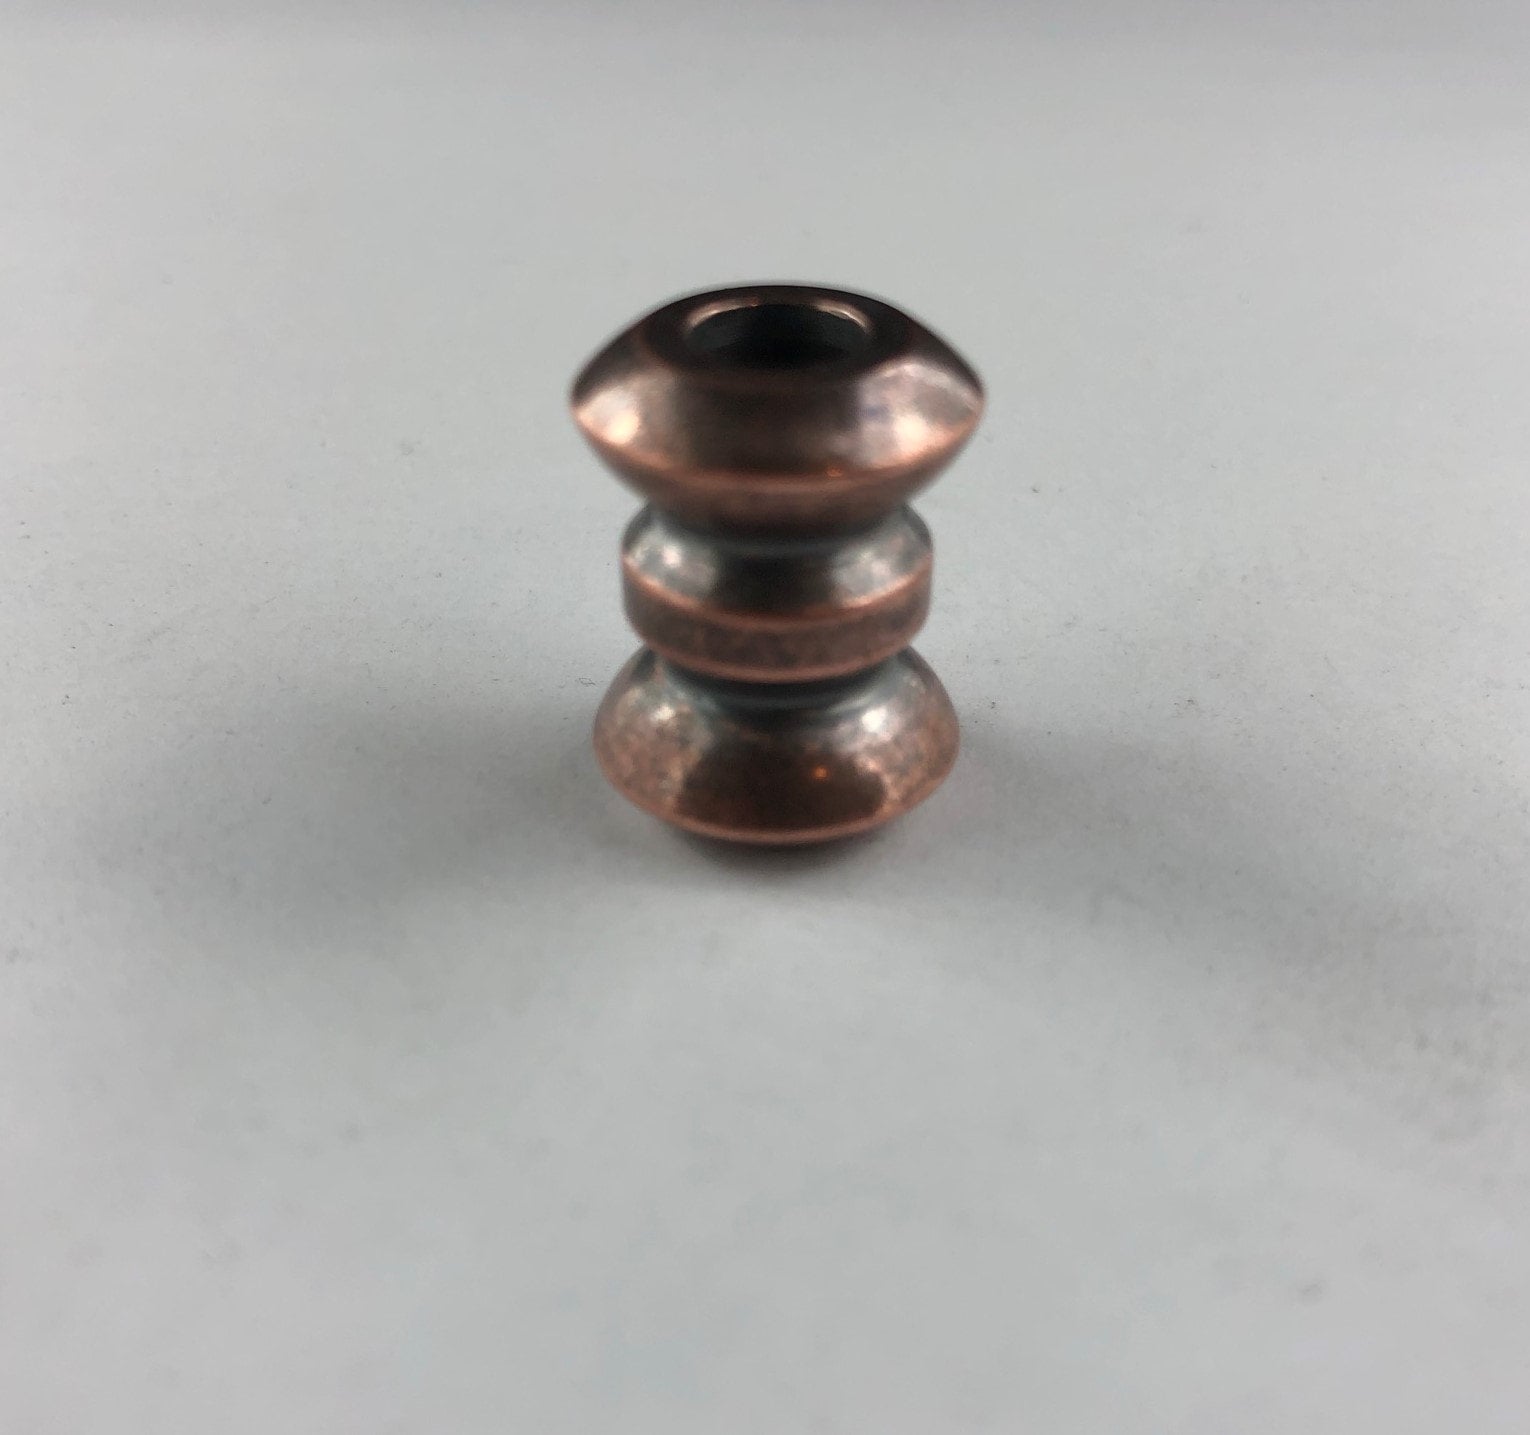 Antiqued Copper Bowtie Lanyard Bead